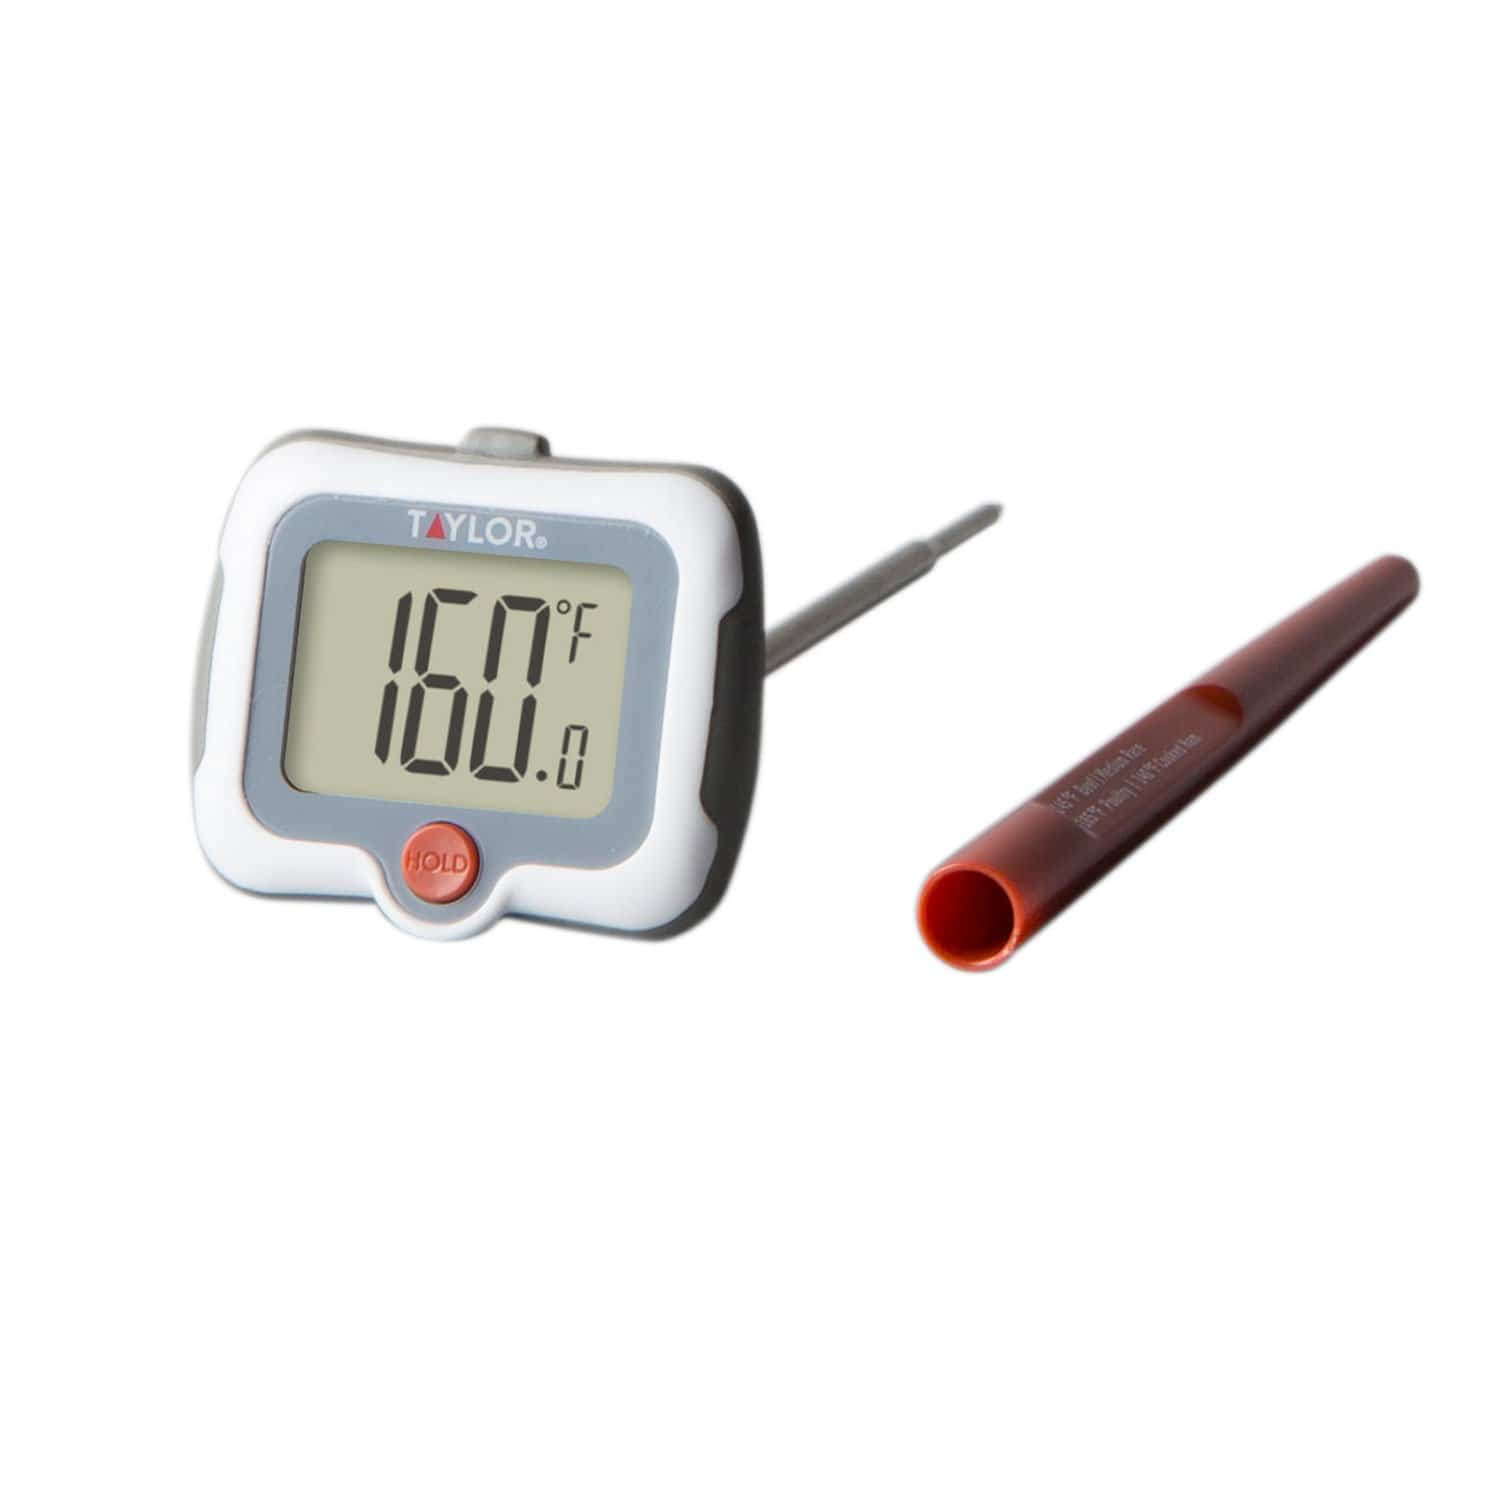 Pivoting Display Thermometer, 9836